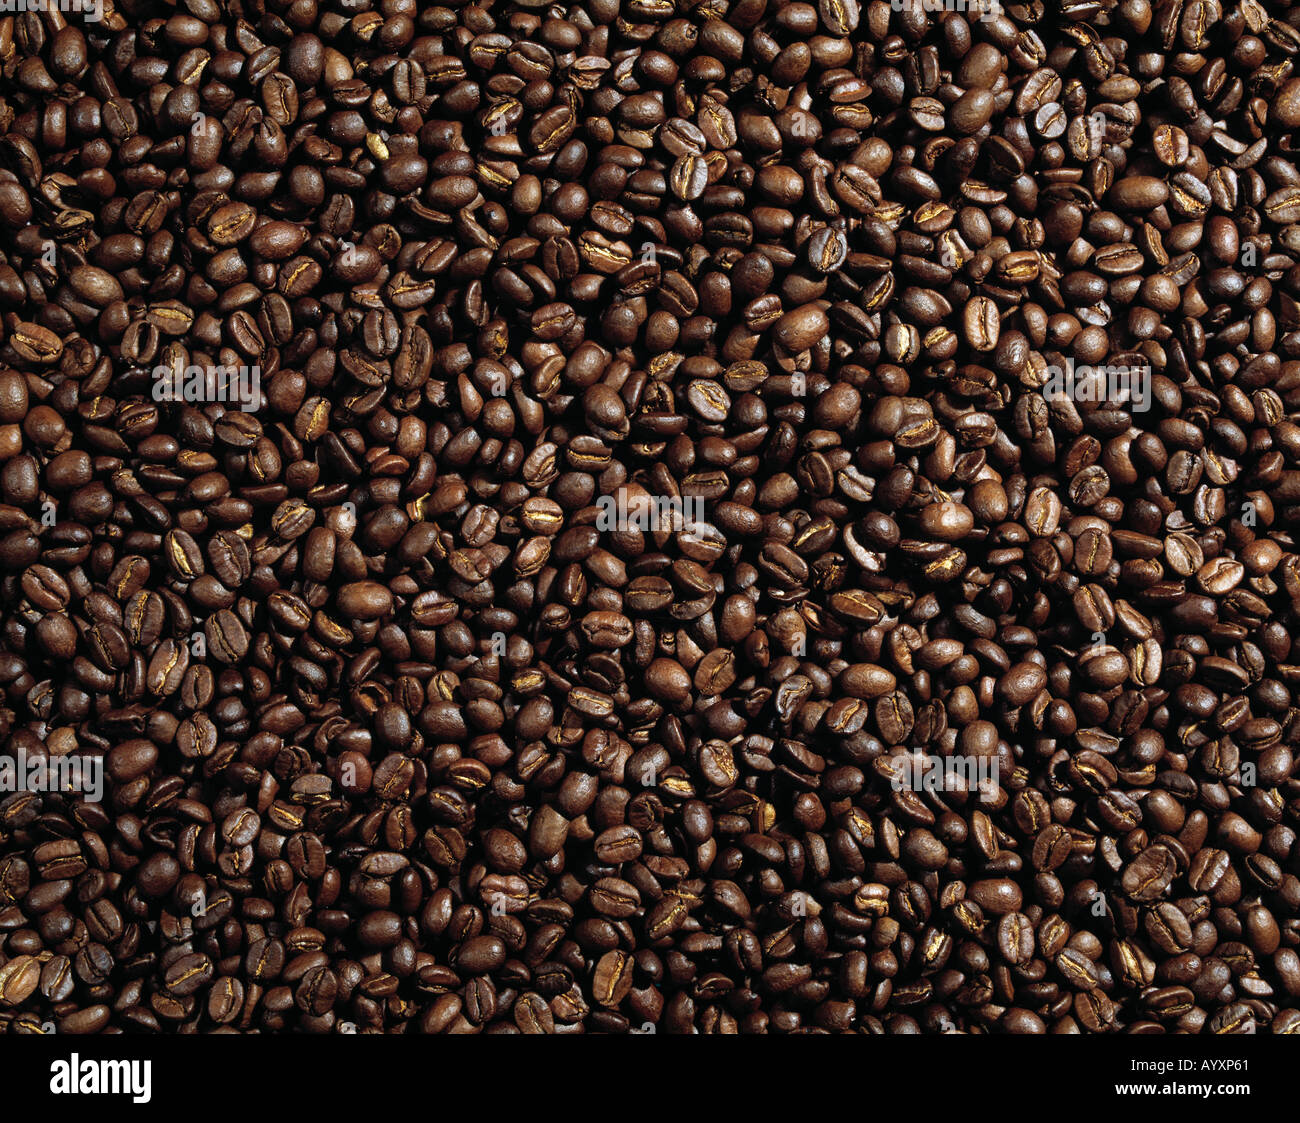 food, coffee beans, roasted coffee beans, make some coffee, drink coffee, coffee growing, coffee prices, coffee-coloured, symbol, symbolic, symbolism, Stock Photo